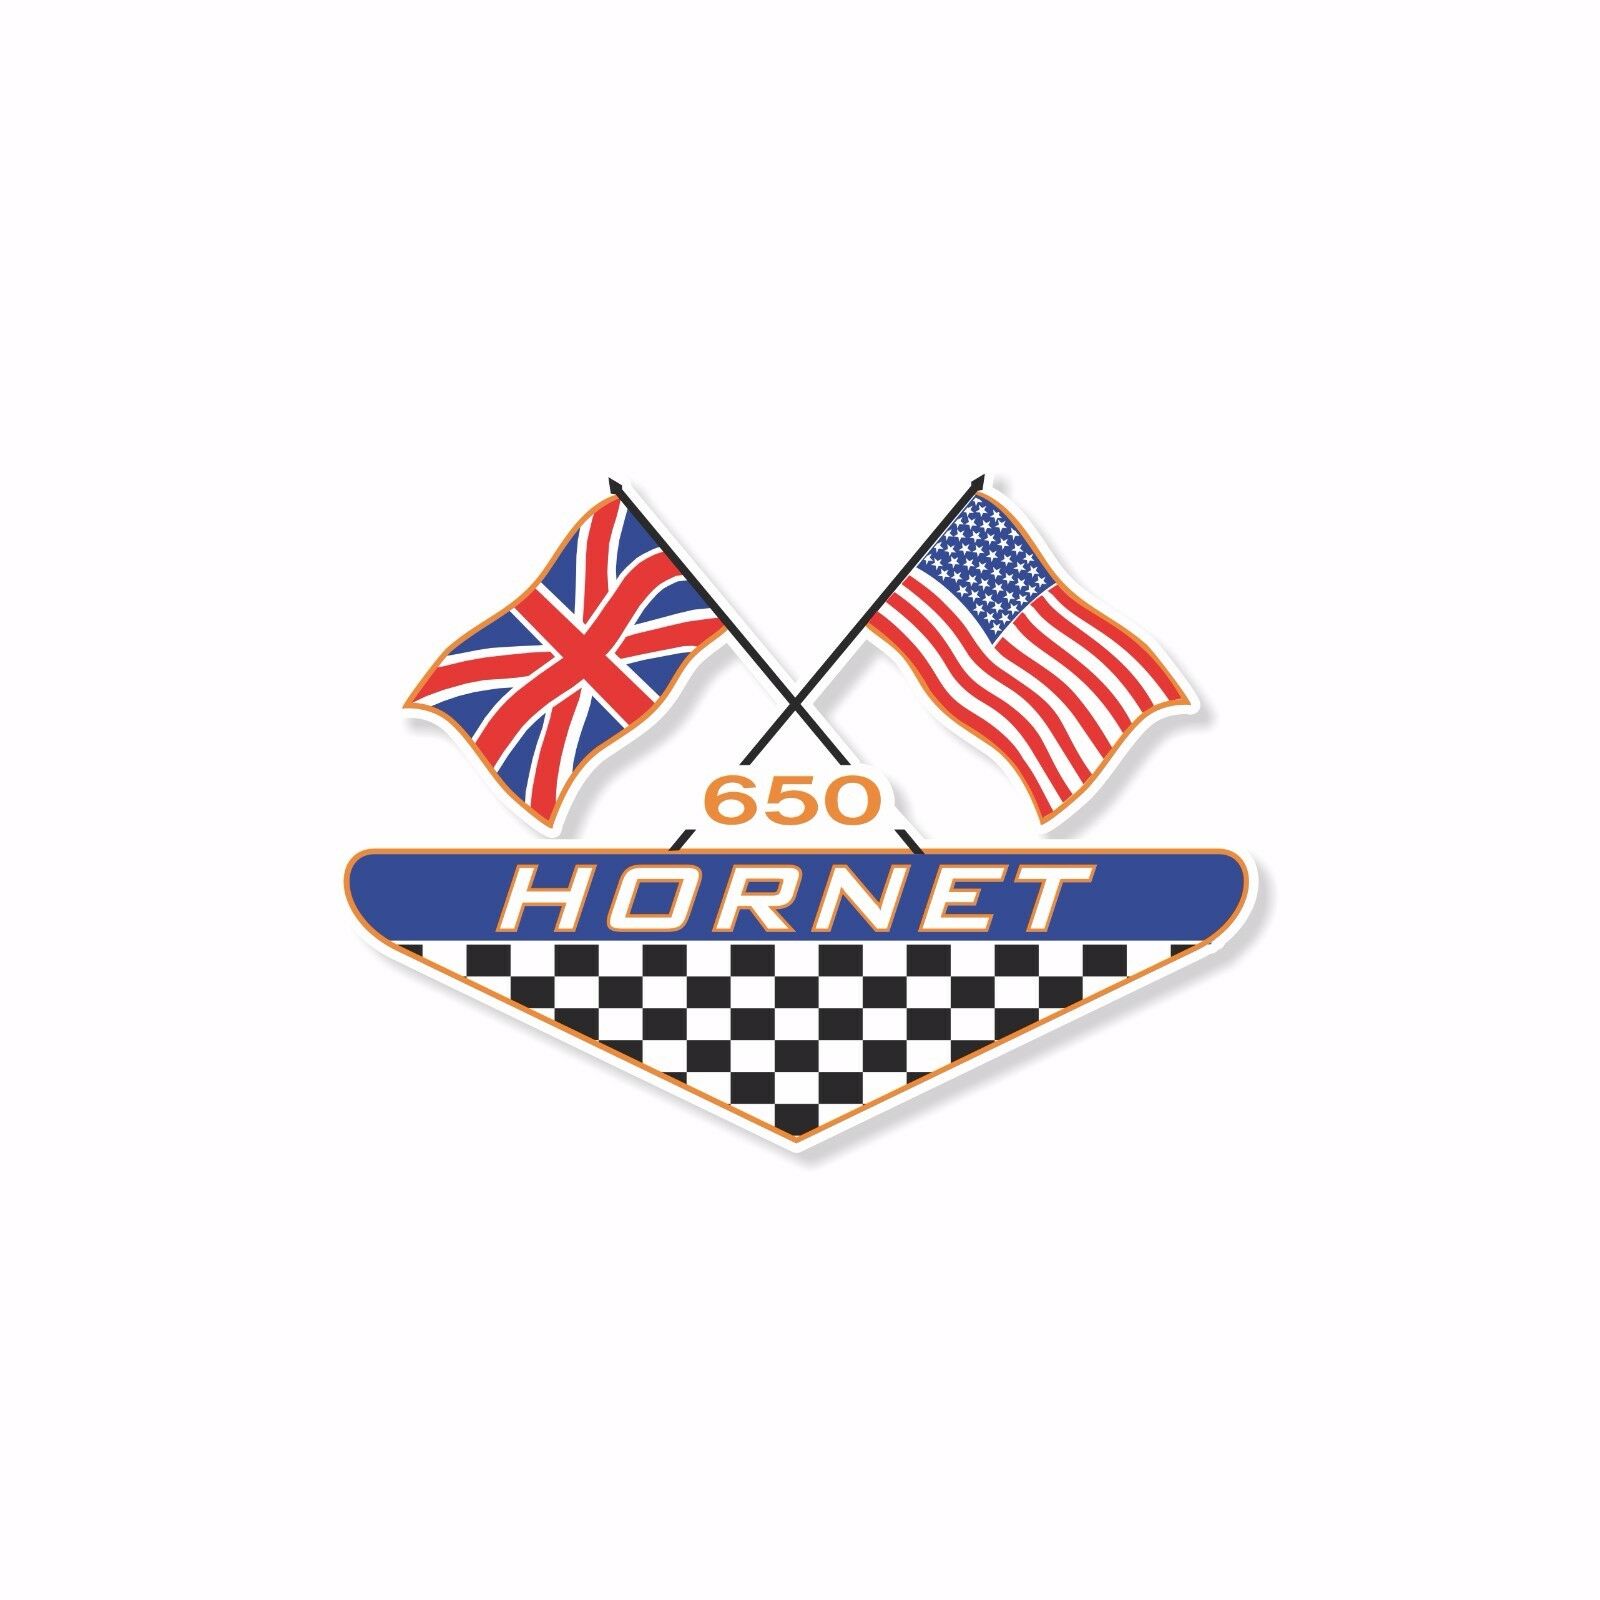 British Bsa Uk Usa Hornet 650 Motorcycle Motorbike Decal Sticker